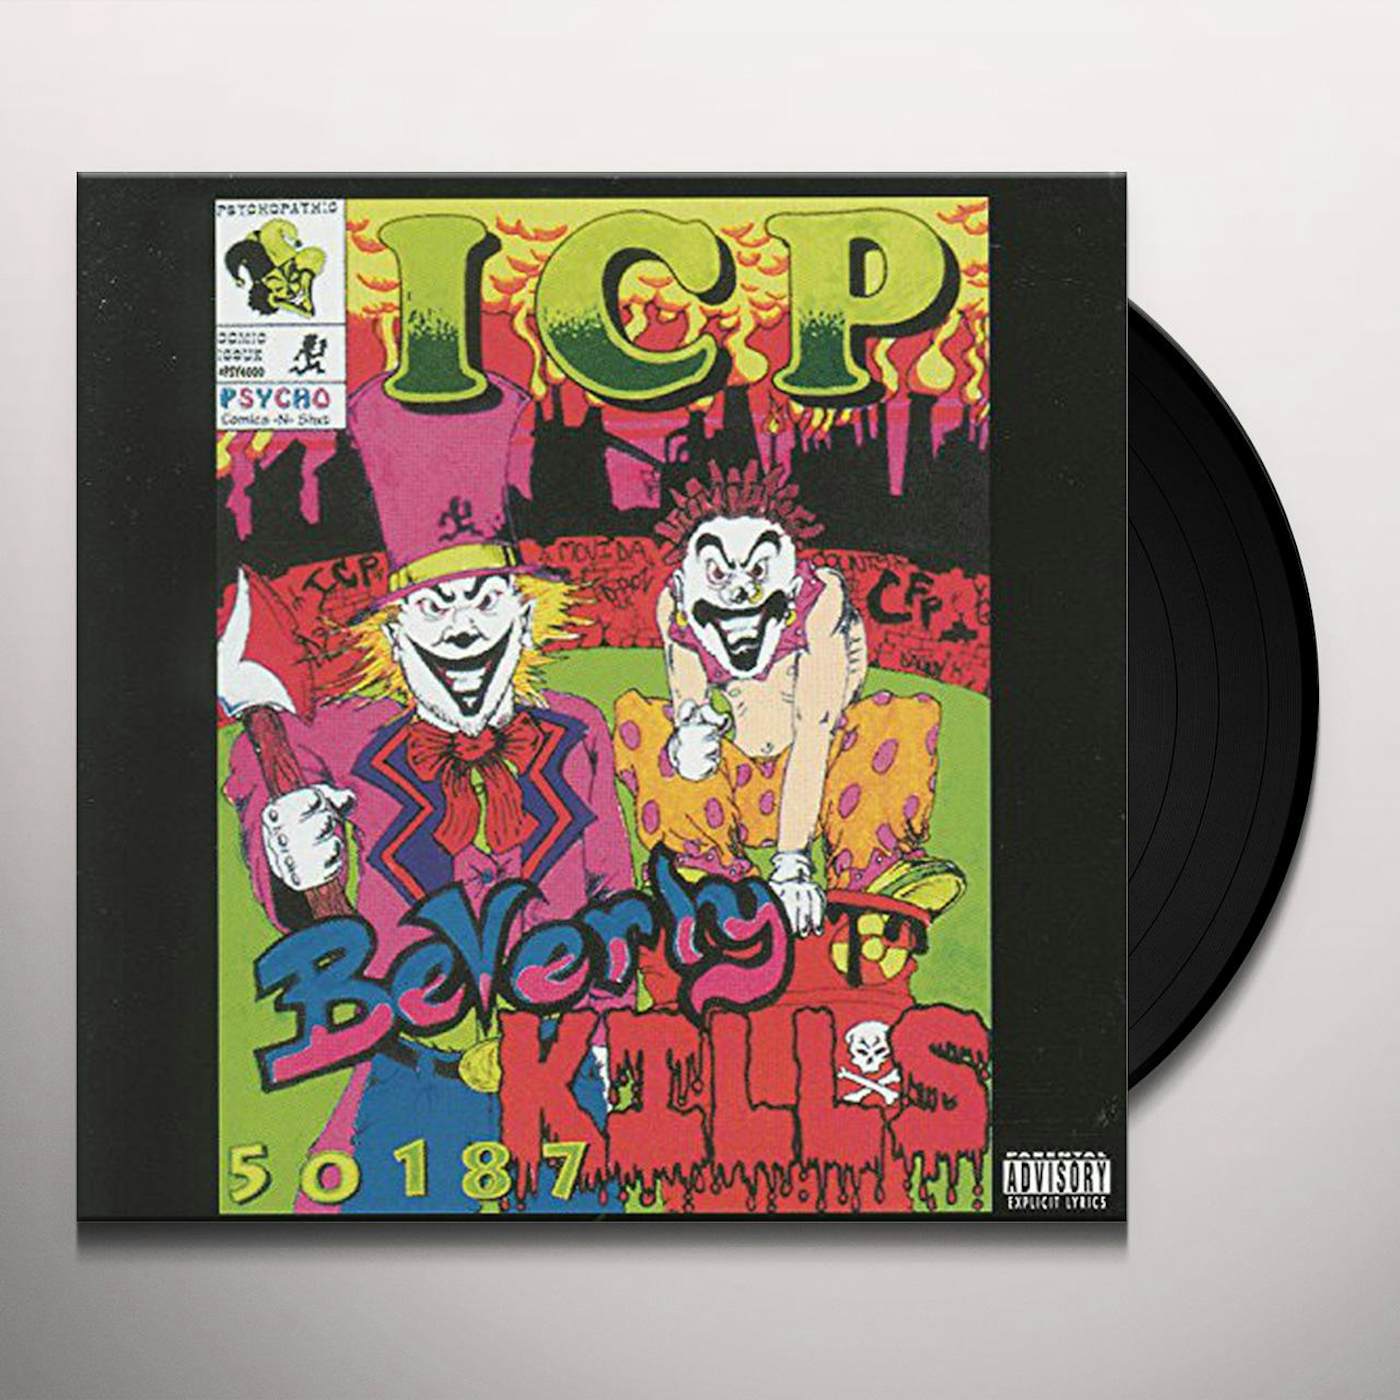 Insane Clown Posse Beverly Kills 50187 Vinyl Record